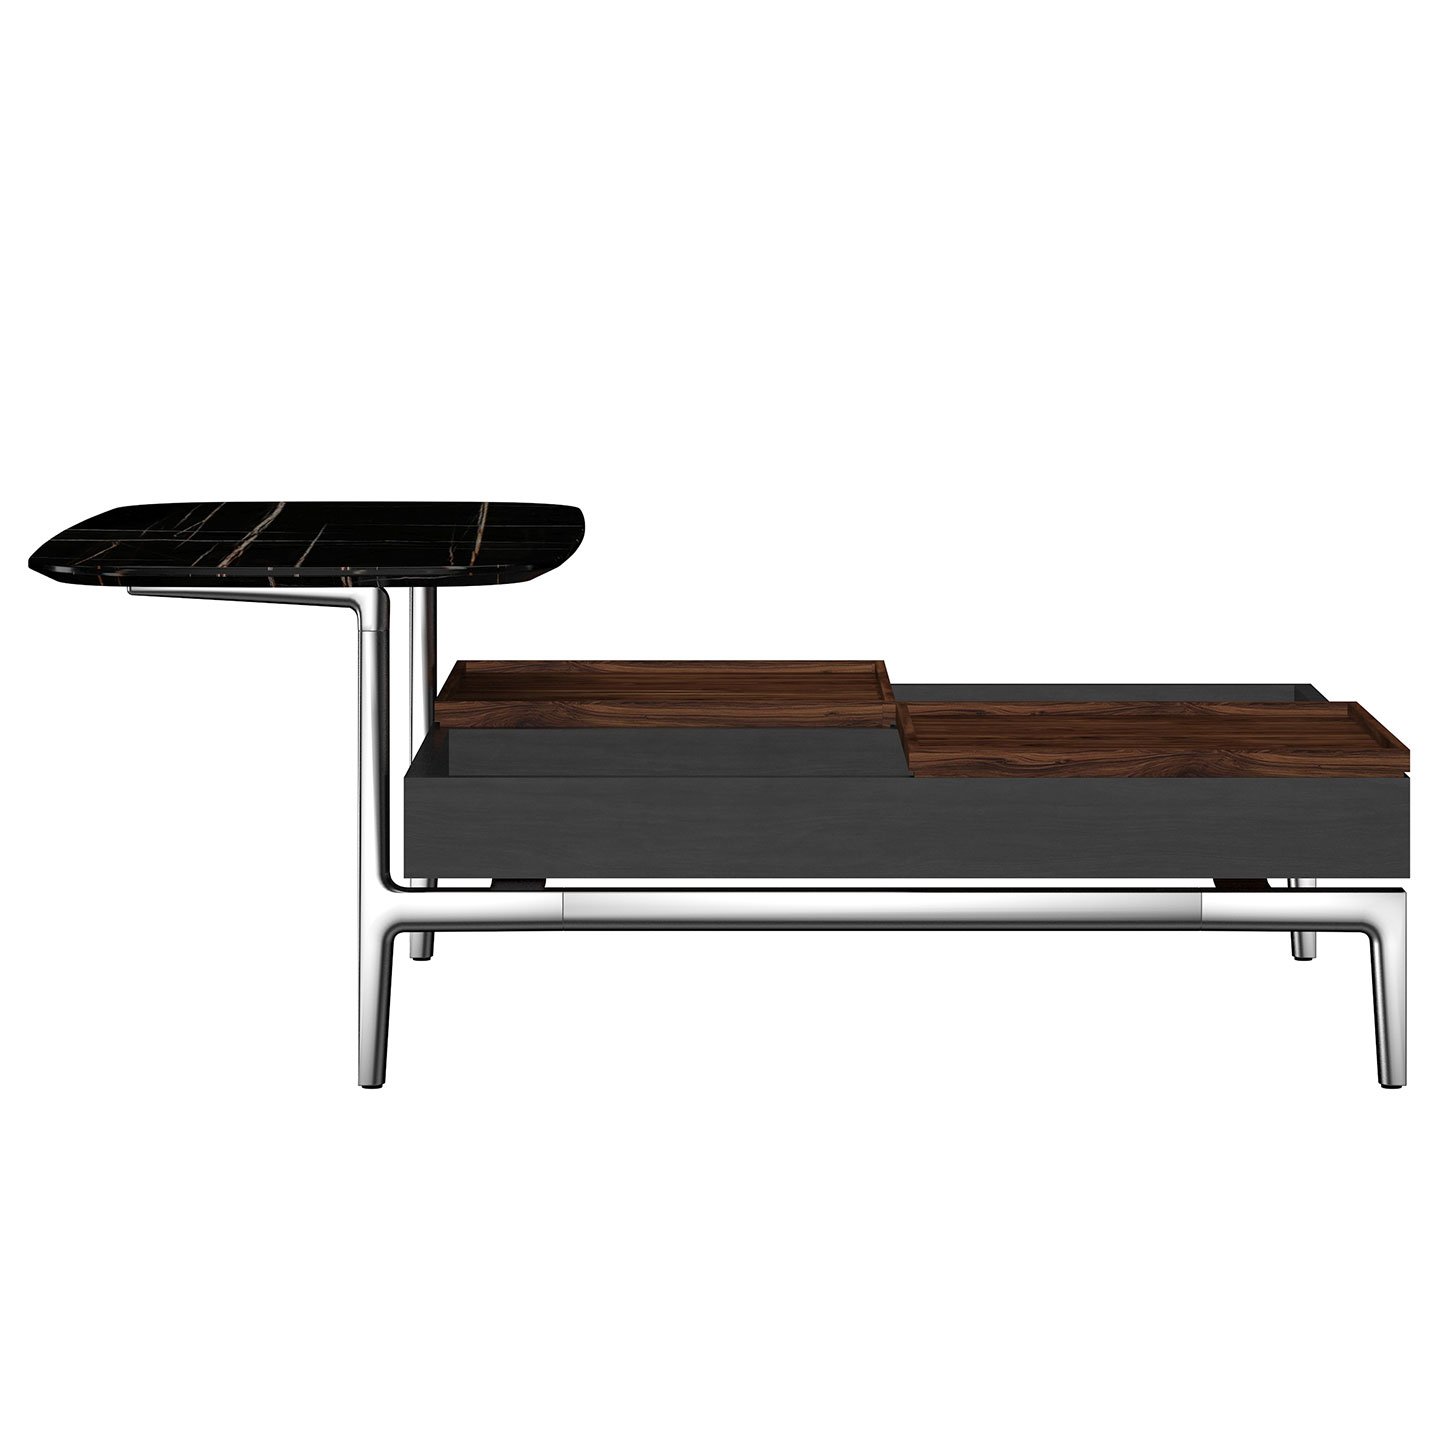 Haworth Volage Table double tier coffee table in sahara noir 